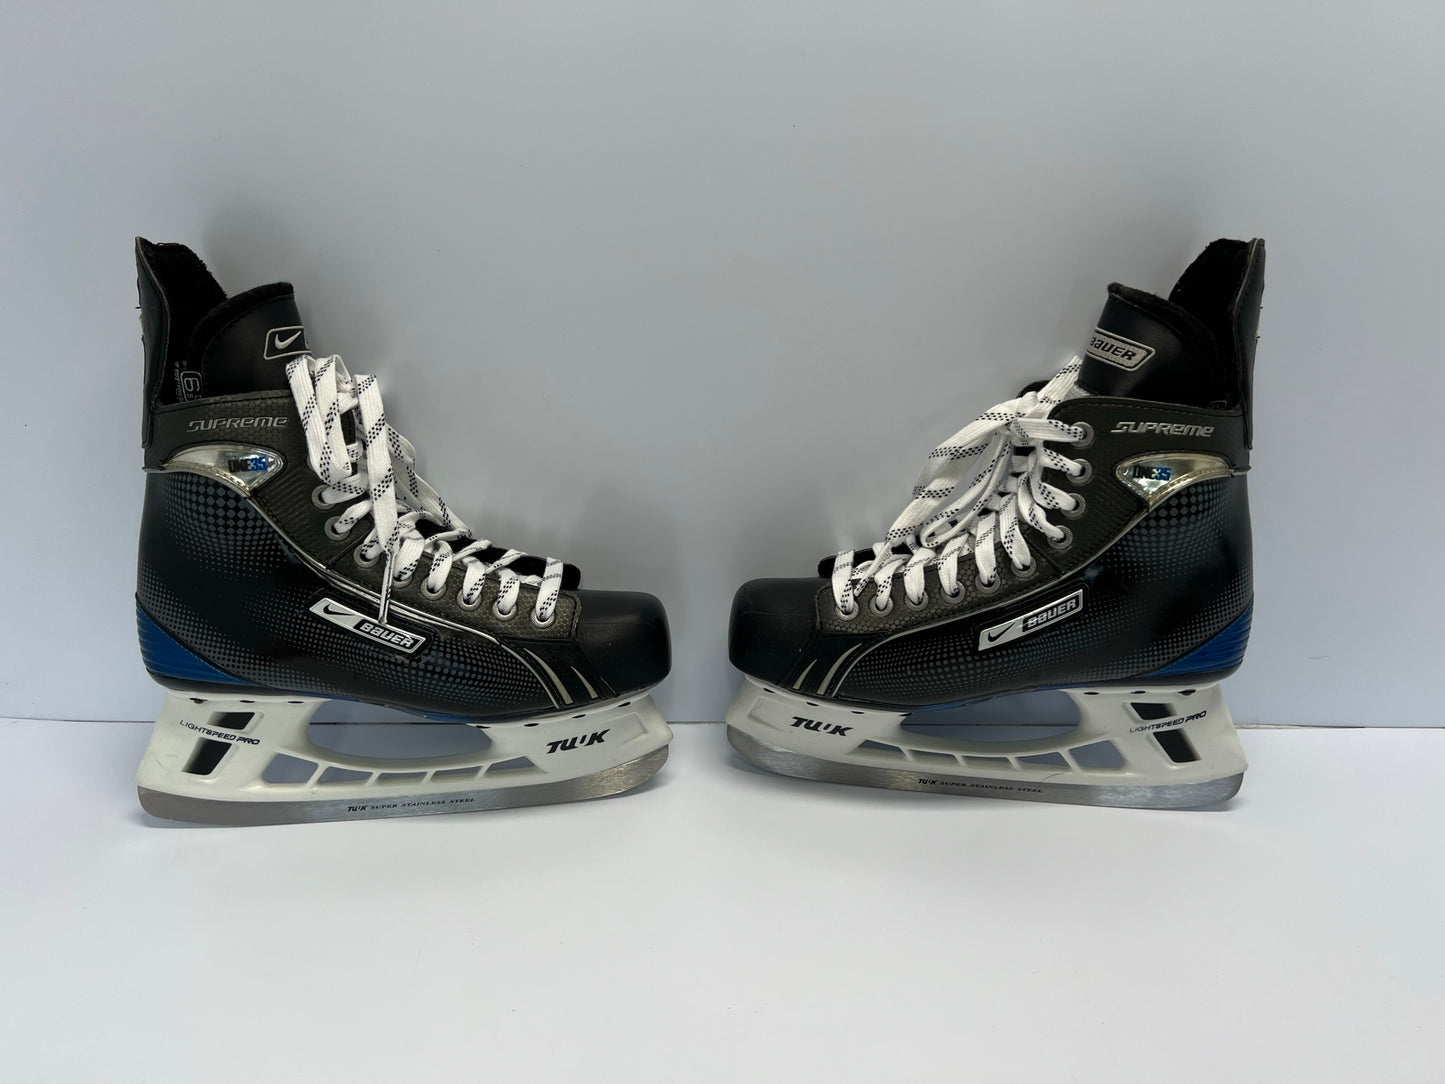 Hockey Skates Men's Size 8 Shoe 6.5 Skate Size Bauer Nike One35 New Demo Model